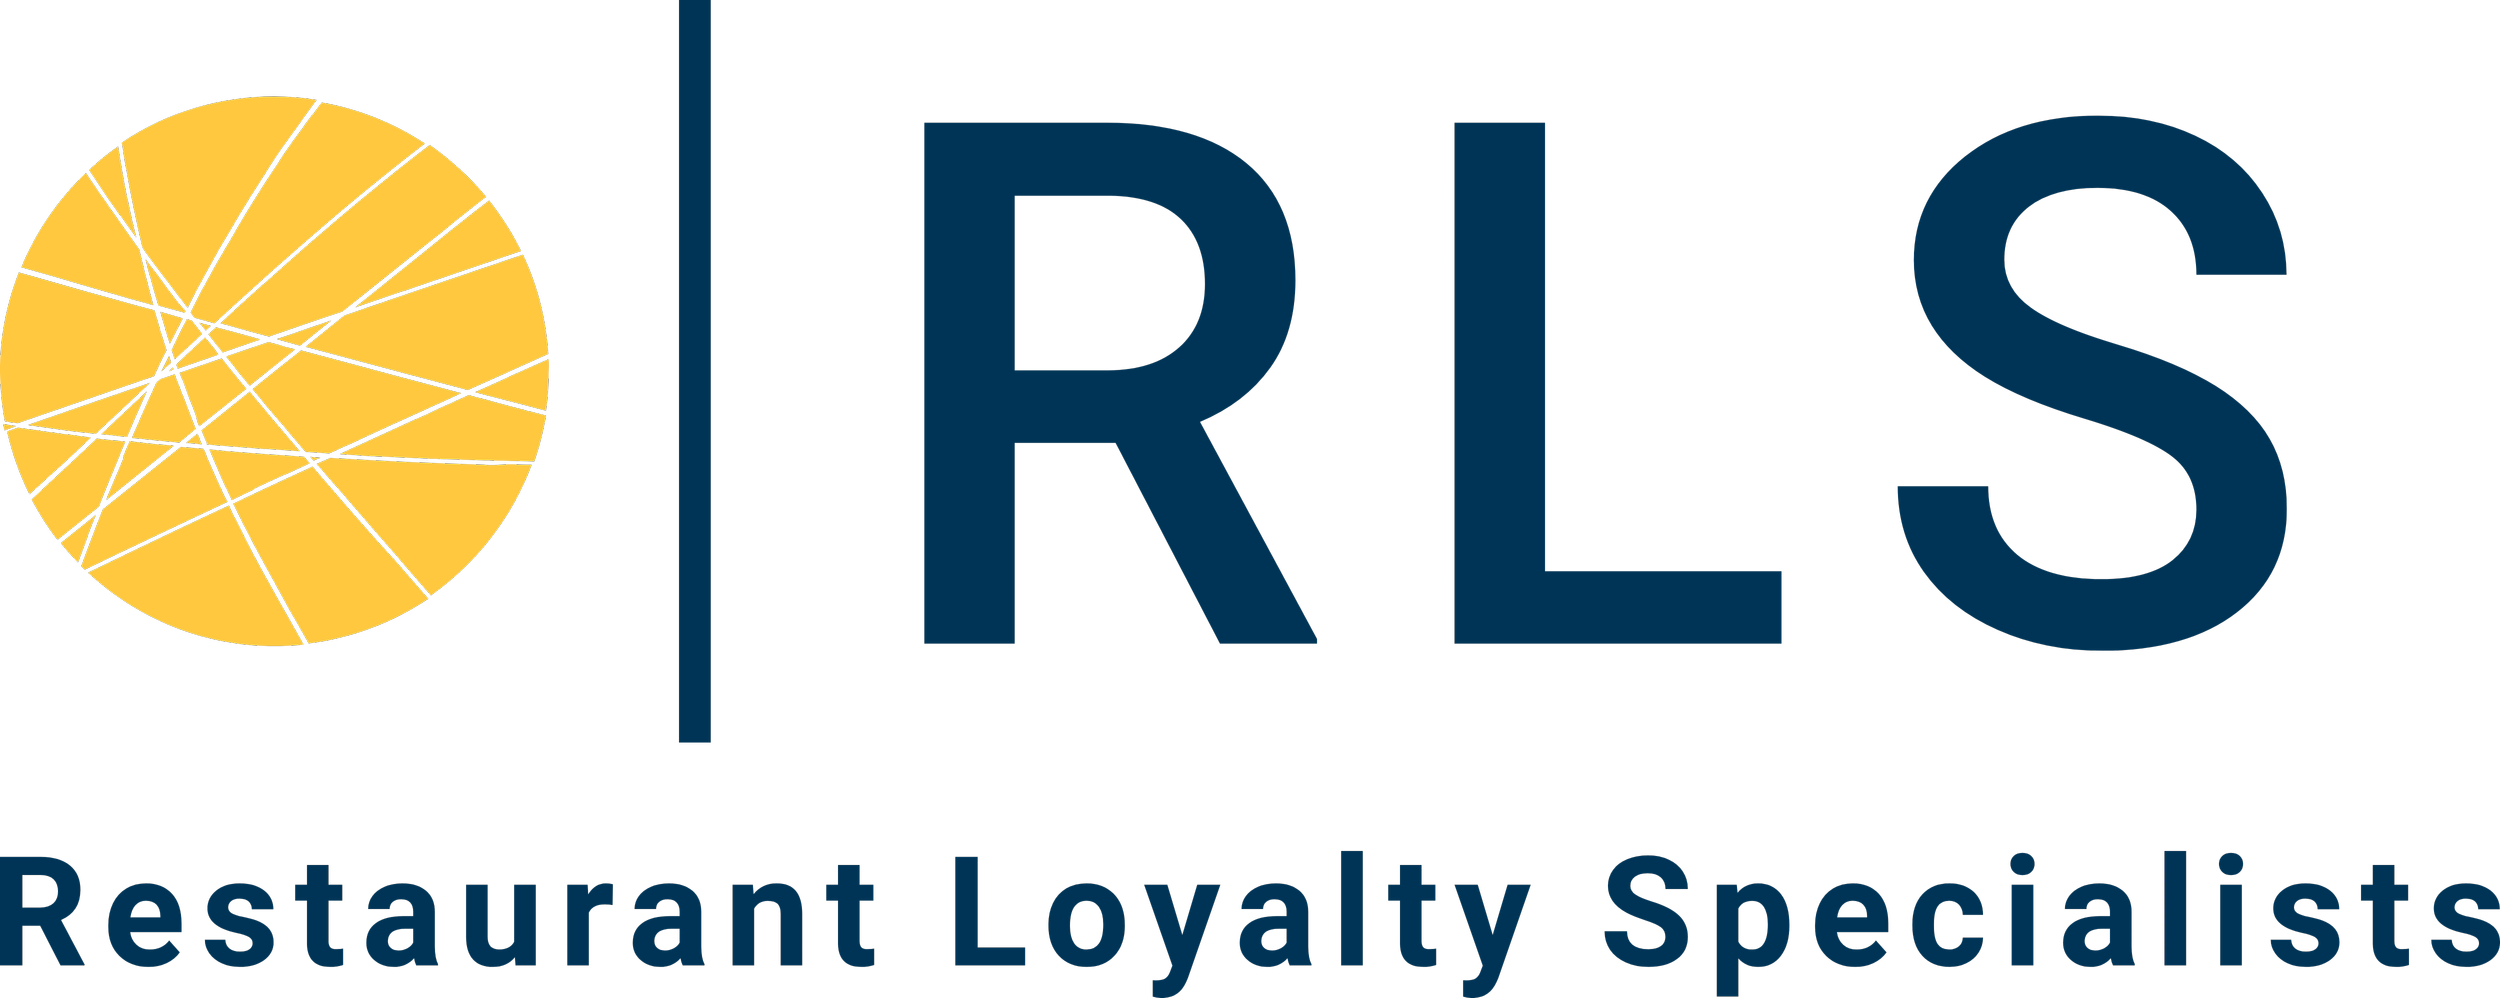 Restaurant Loyalty Specialists Partnership